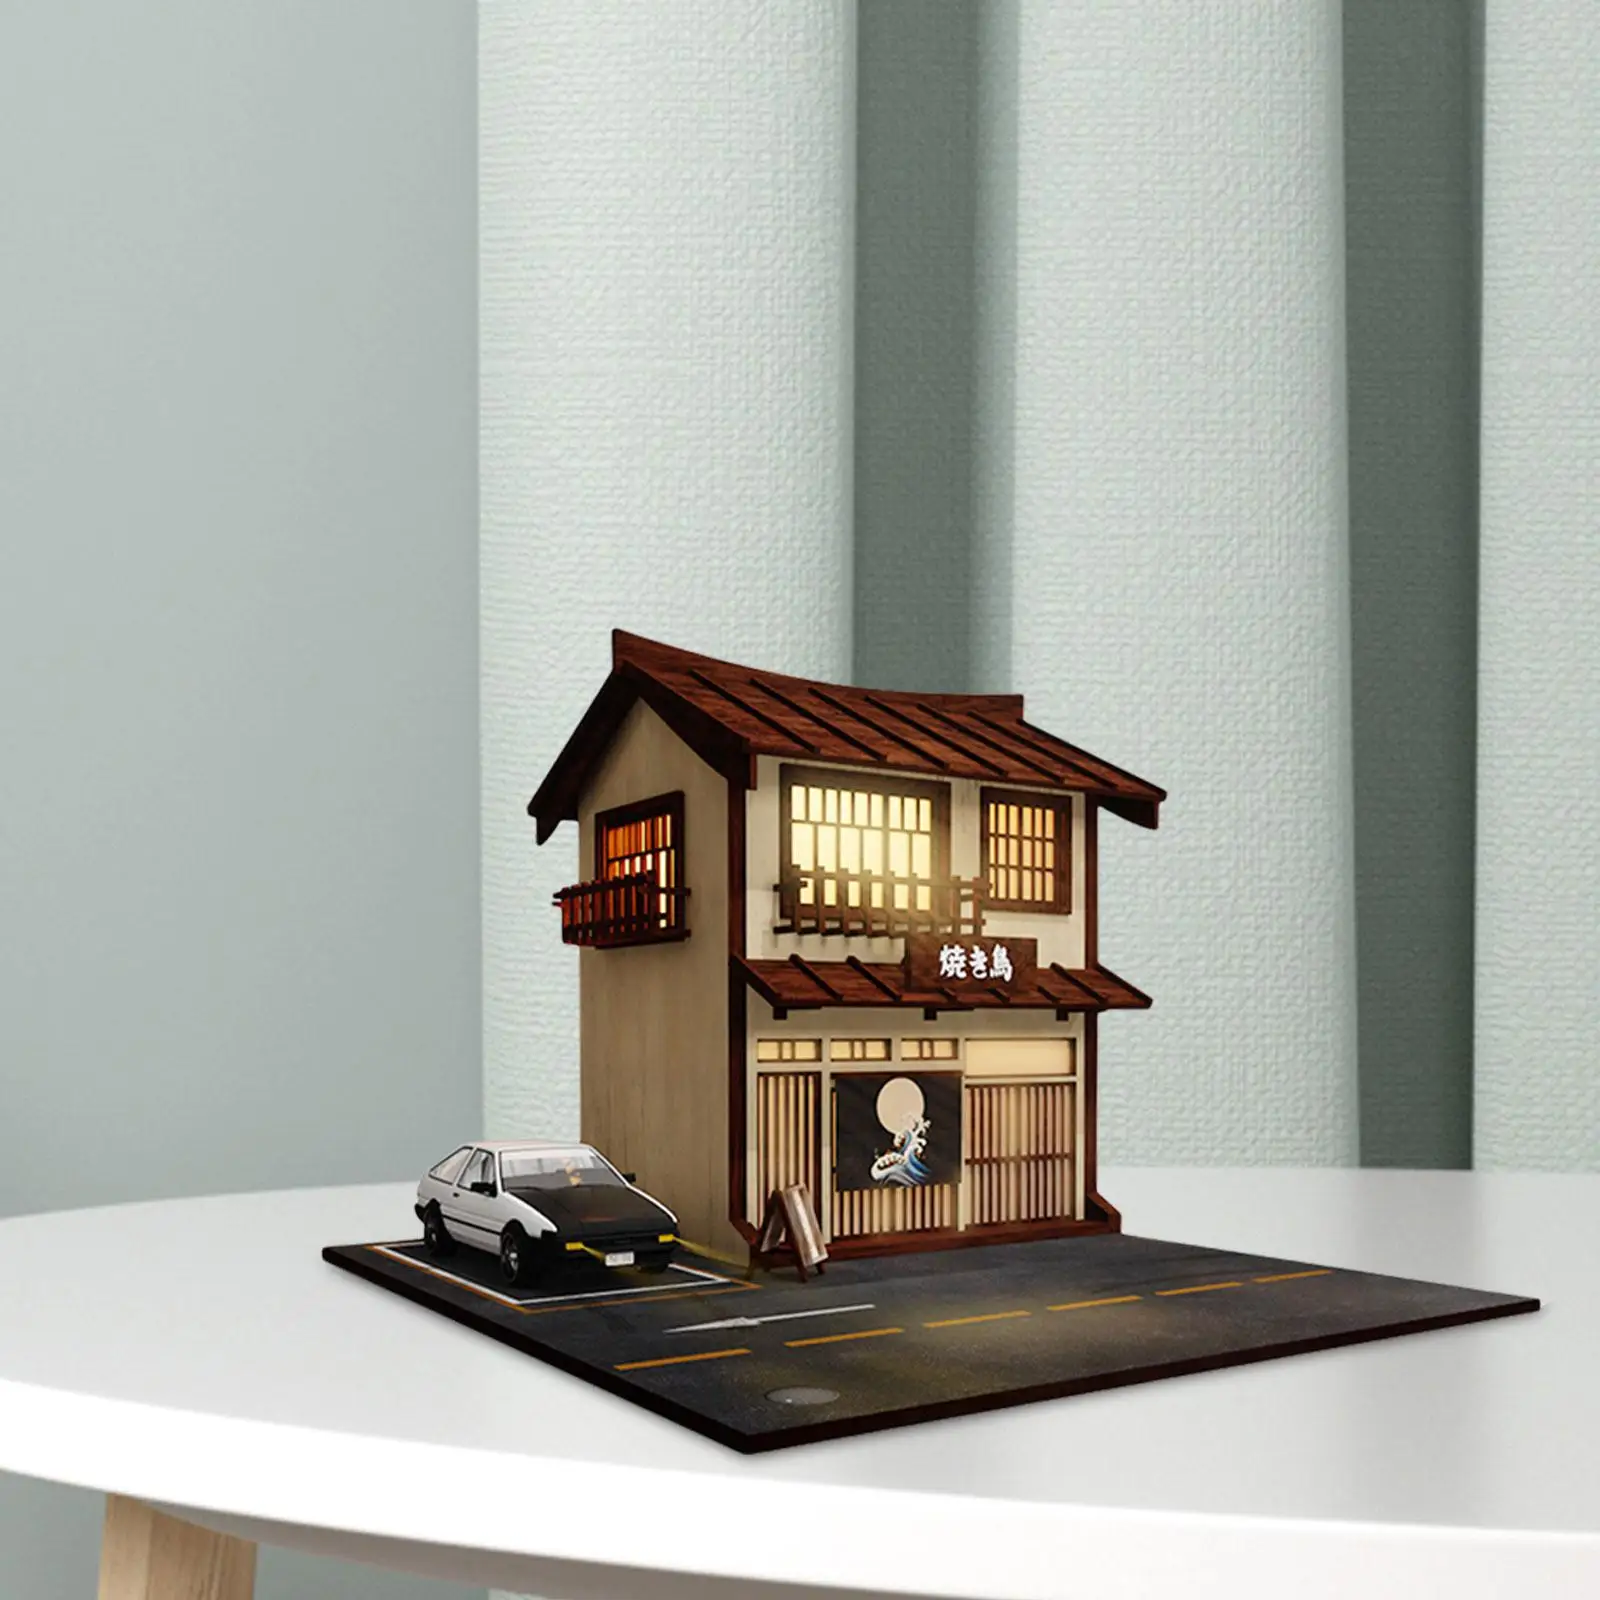 1:64 Car Garage Diorama Model for Scene Layout Props Micro Landscape DIY Scene Model Miniature Scene Layout Model Train Layout